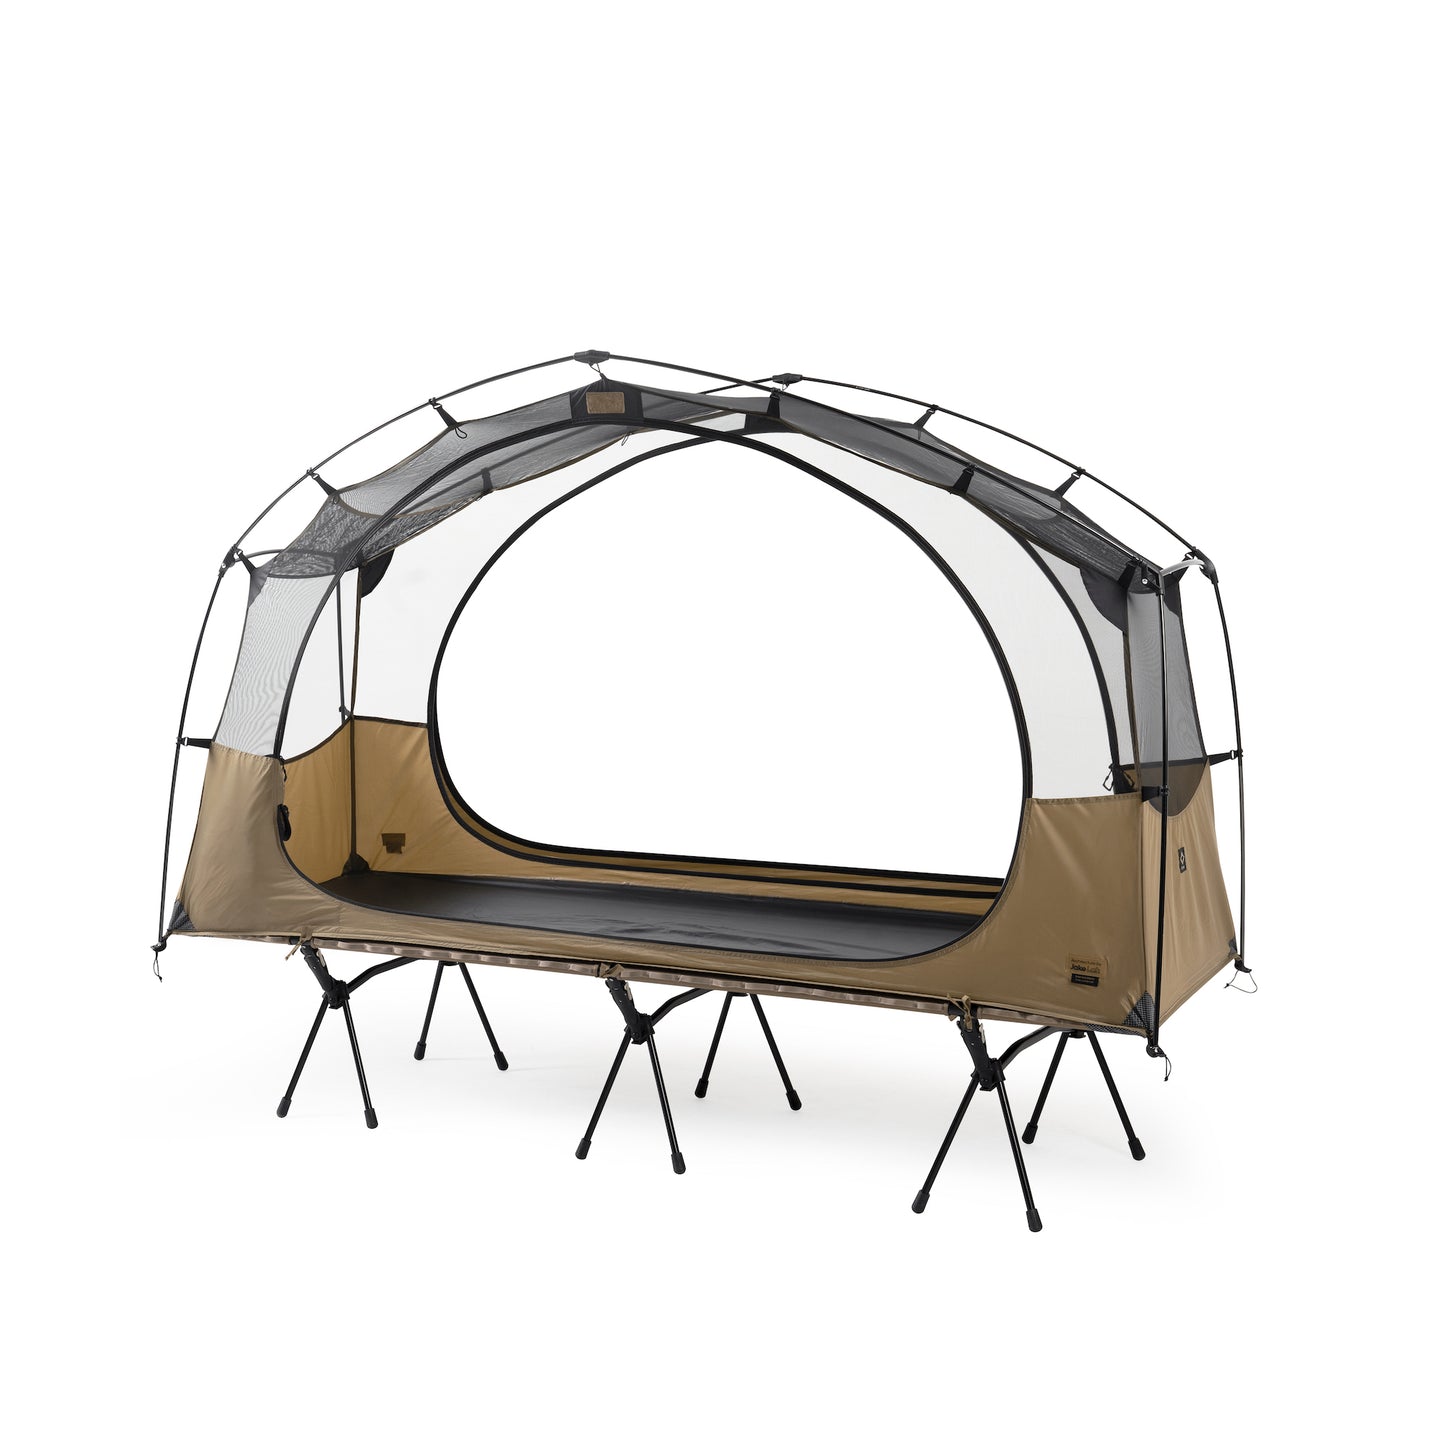 Tac. Cot Tent Solo Inner tent (mesh) - Coyote Tan